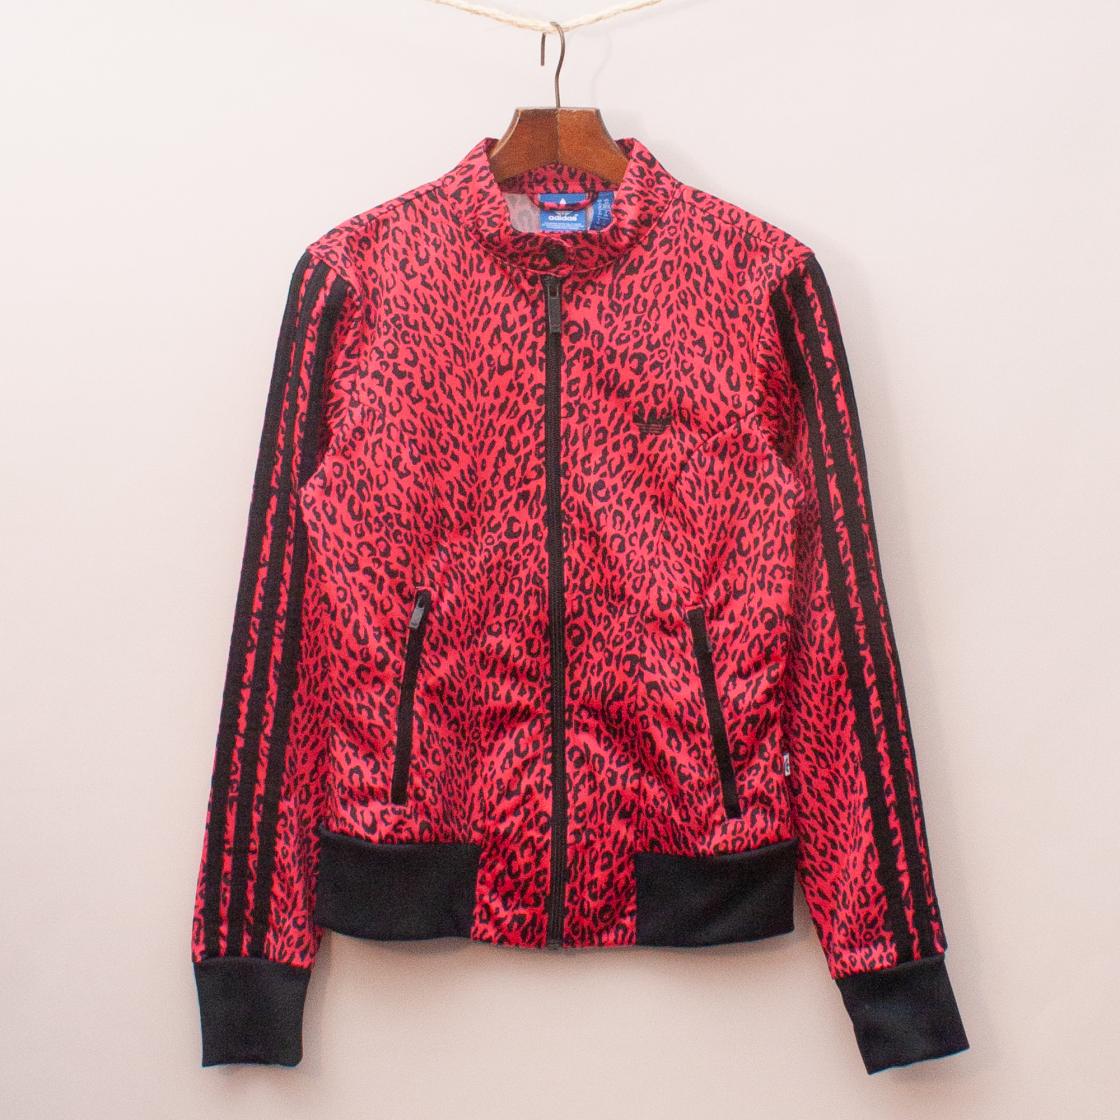 Adidas Leopard Print Sports Jacket